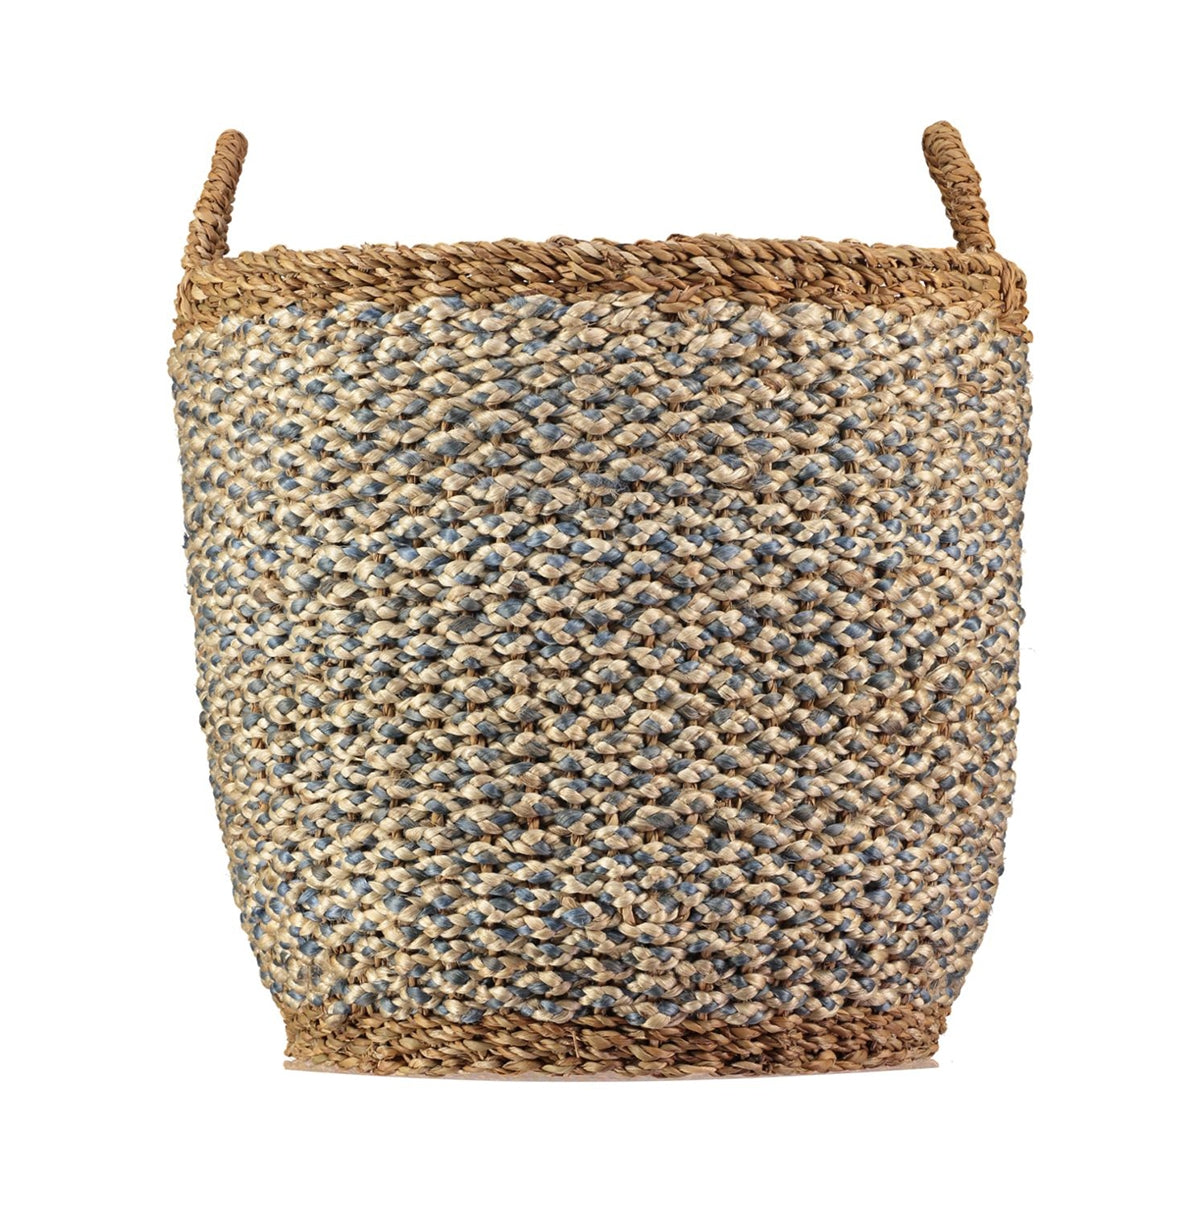 Thistle Basket